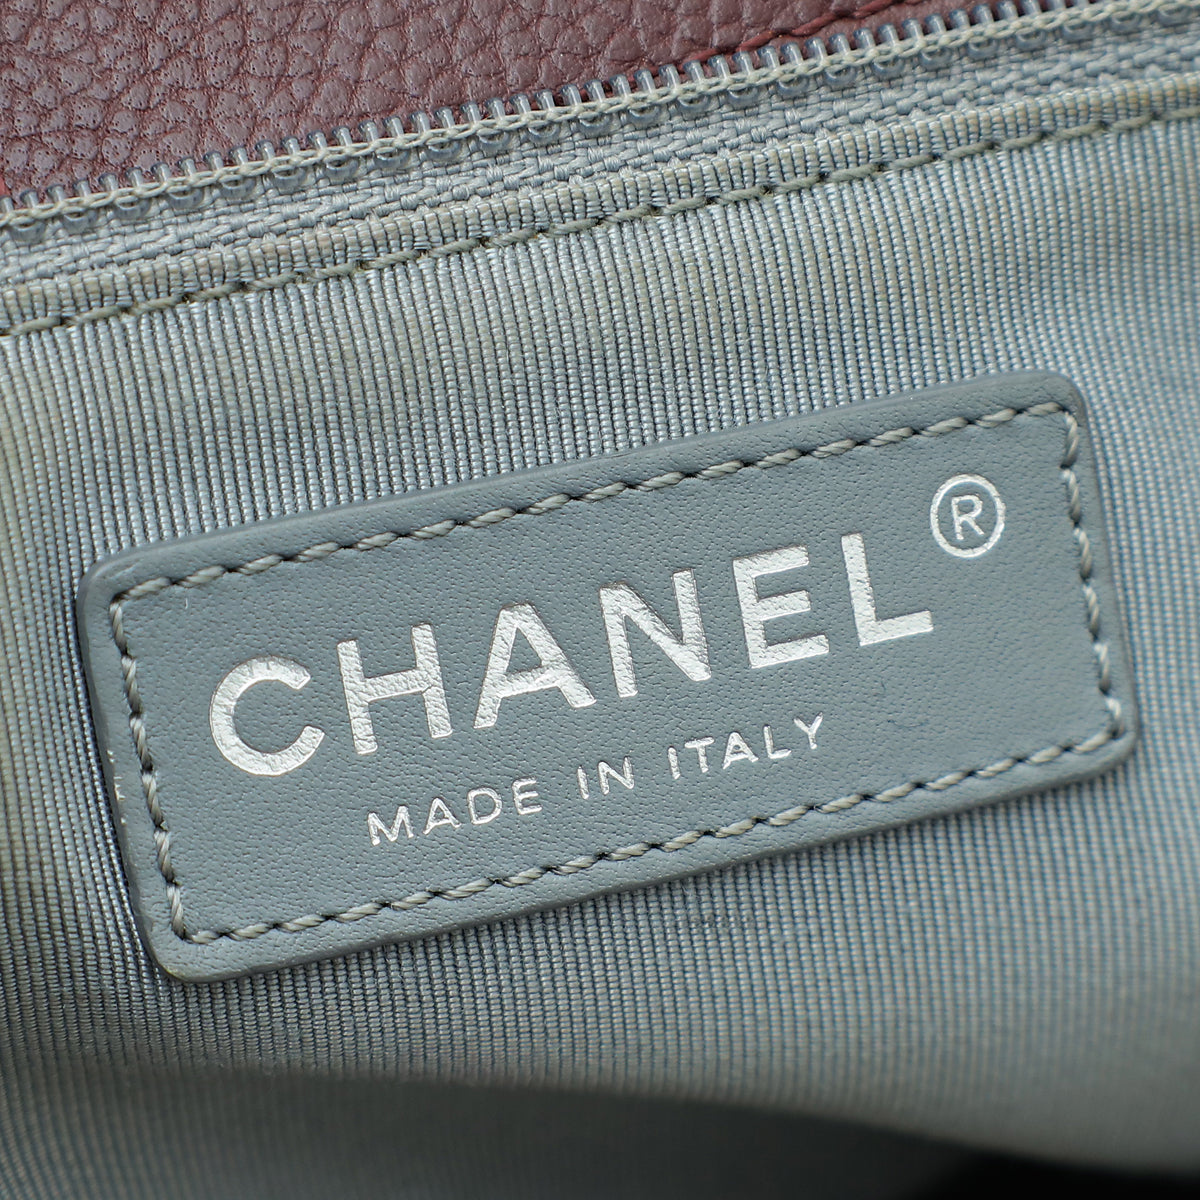 Chanel Burgundy CC Executive Cerf Medium Tote Bag